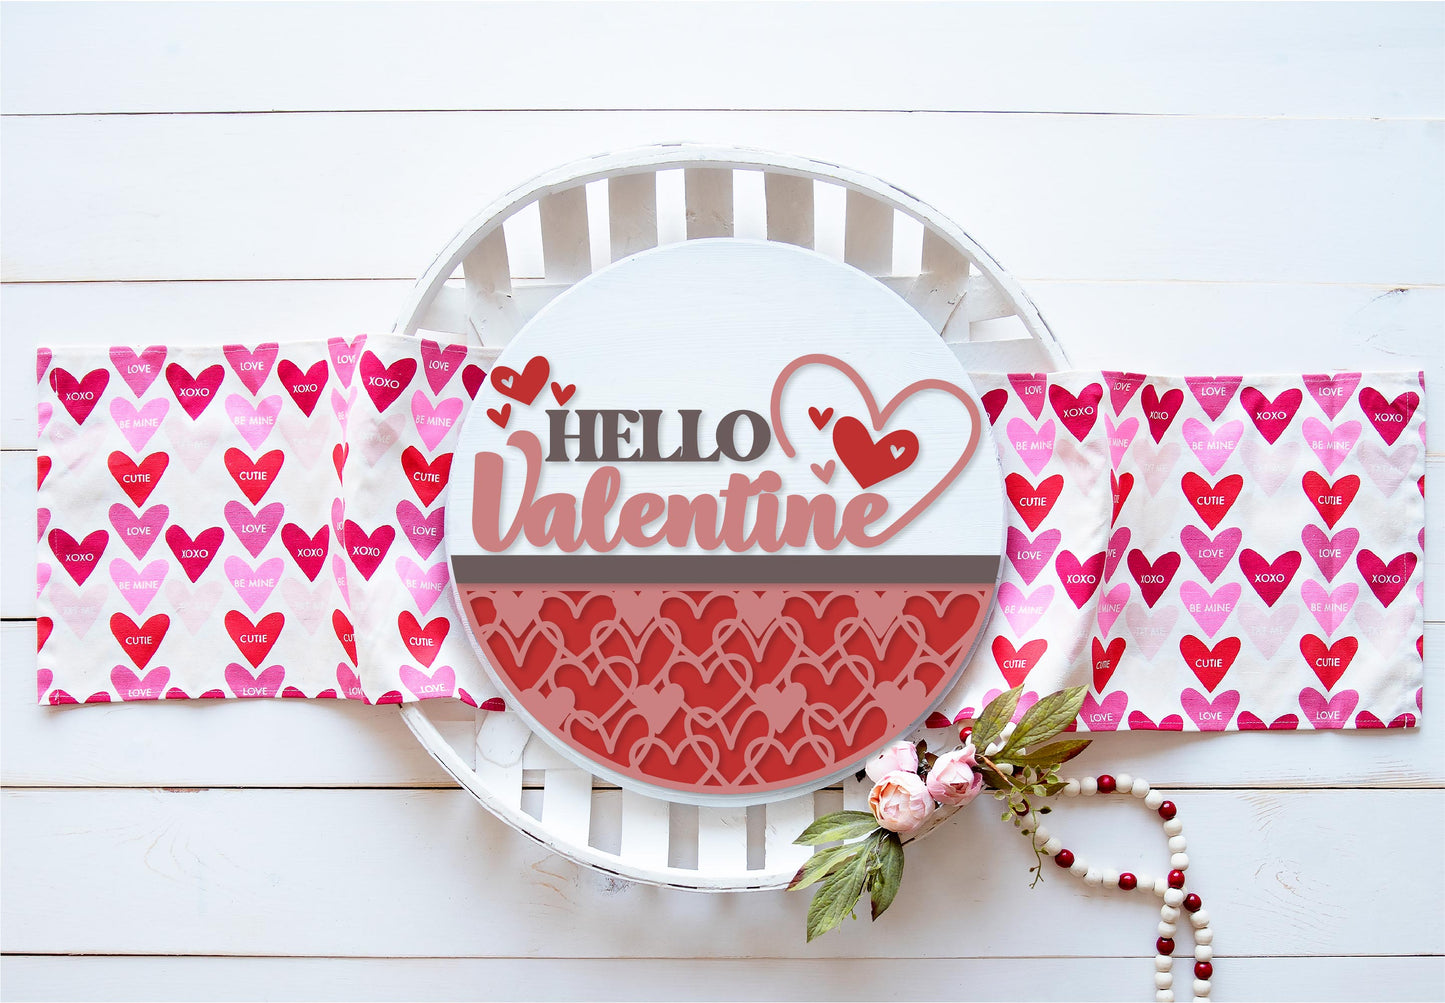 Hello Valentine sign